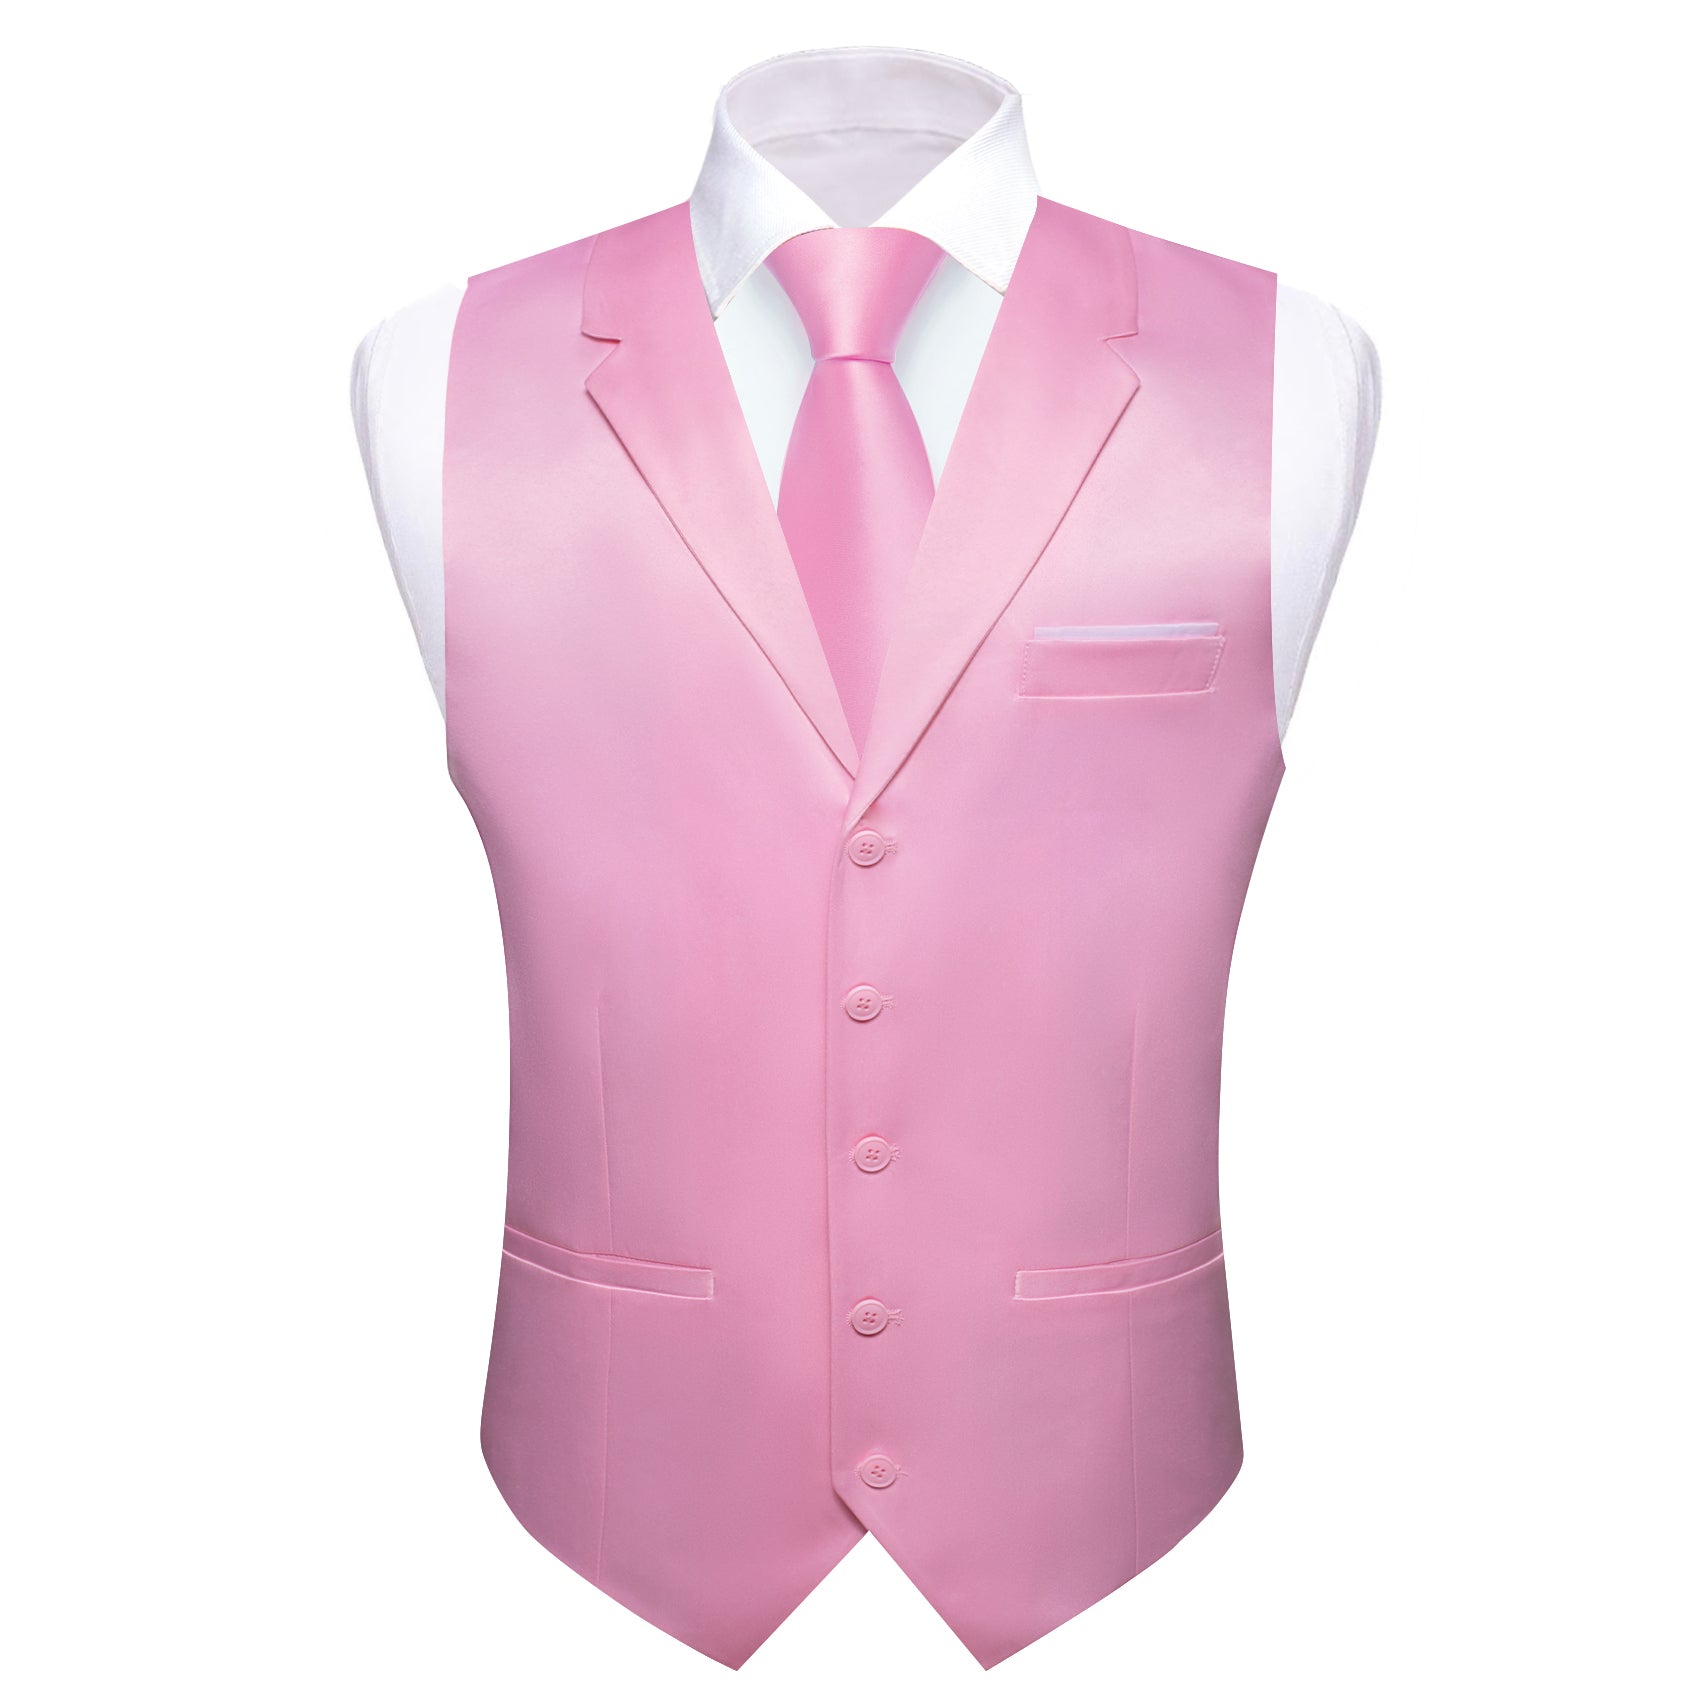 Barry.wang Pink Solid Vest Waistcoat Set